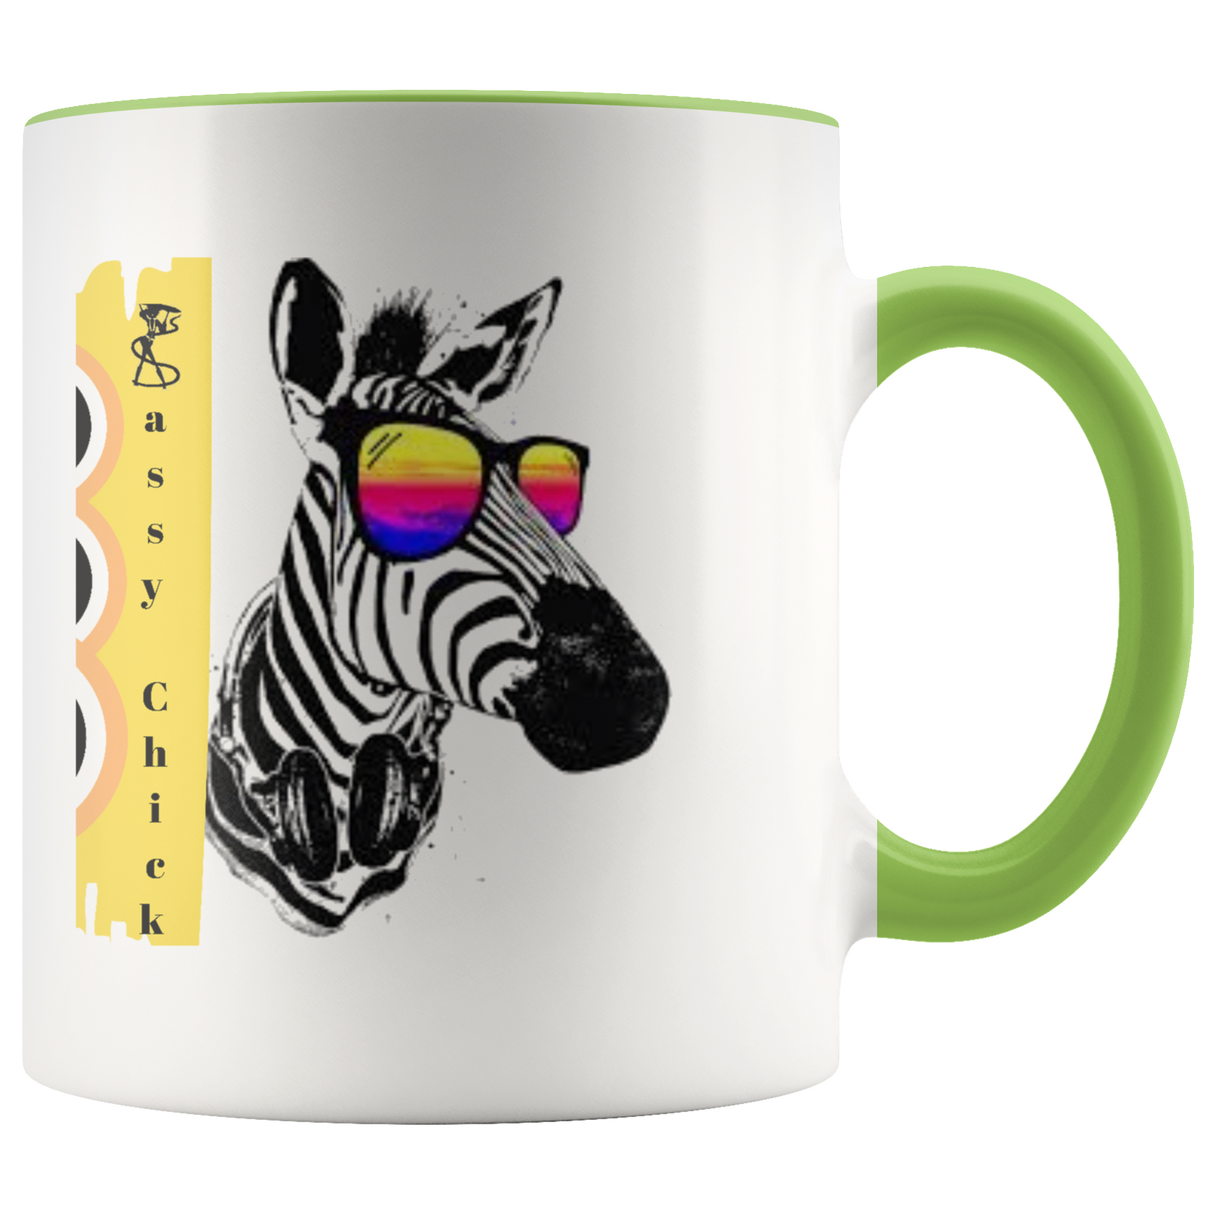 Mug Zebra Ceramic Accent Mug - Green | Shop Sassy Chick